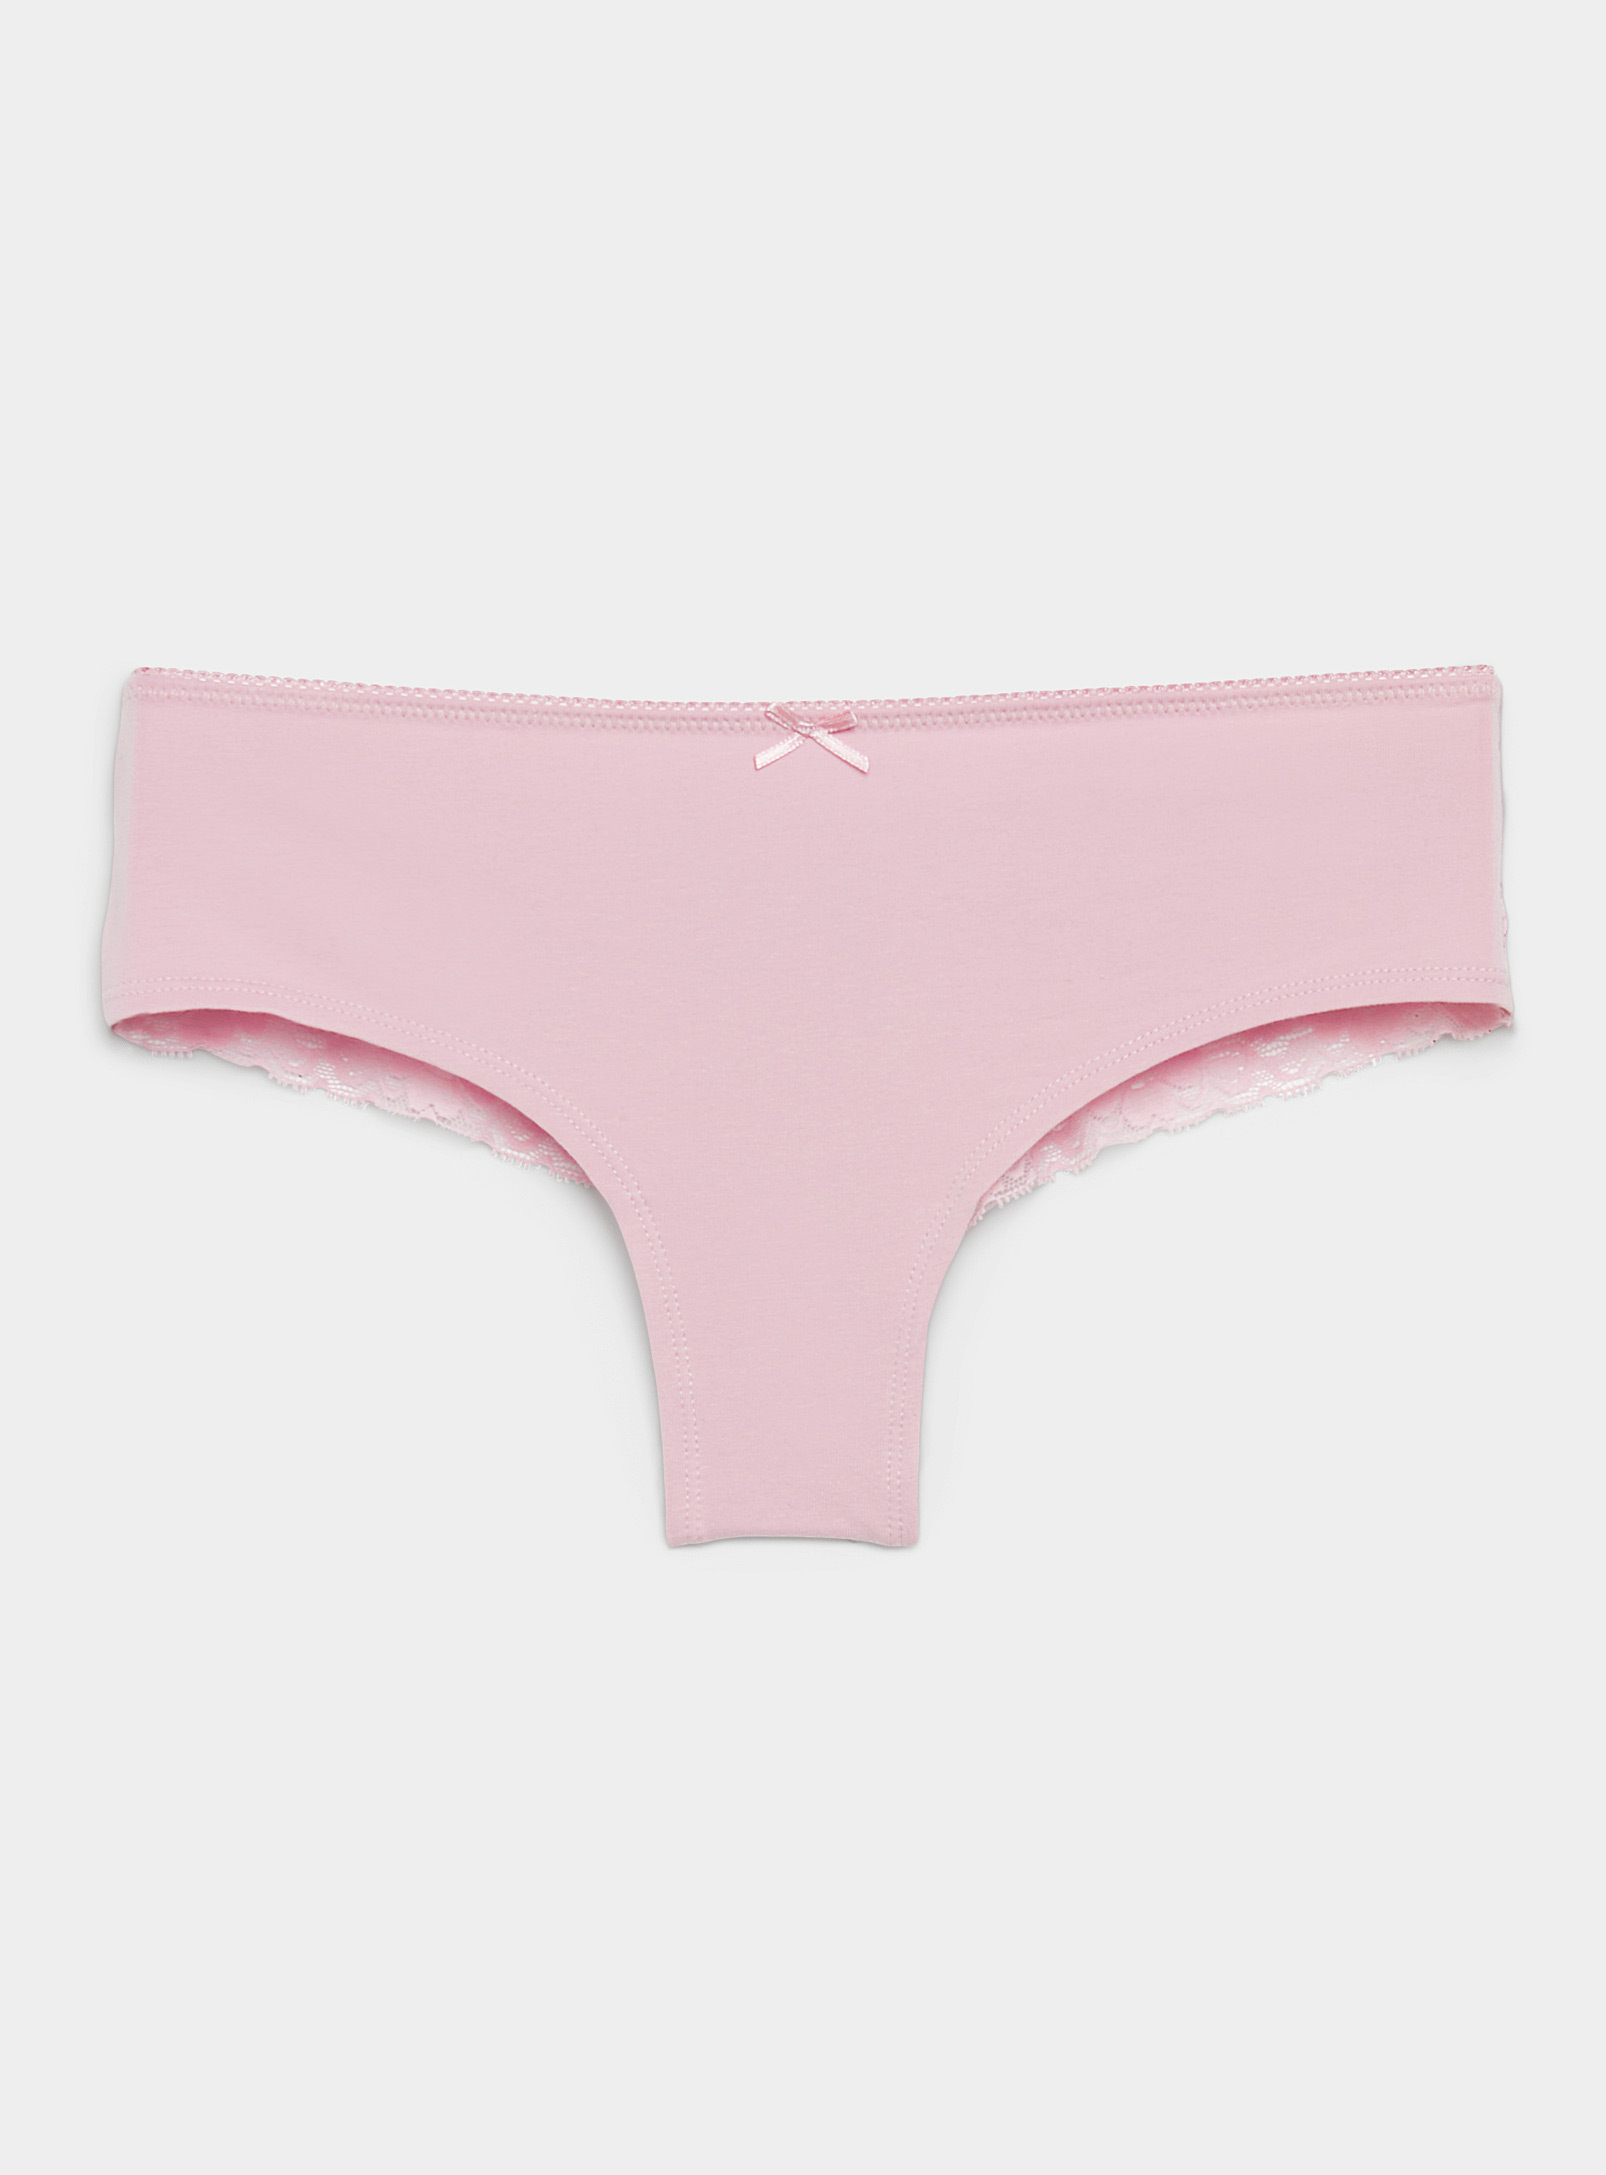 Miiyu Lace Band Cotton Brazilian Panty In Dusky Pink